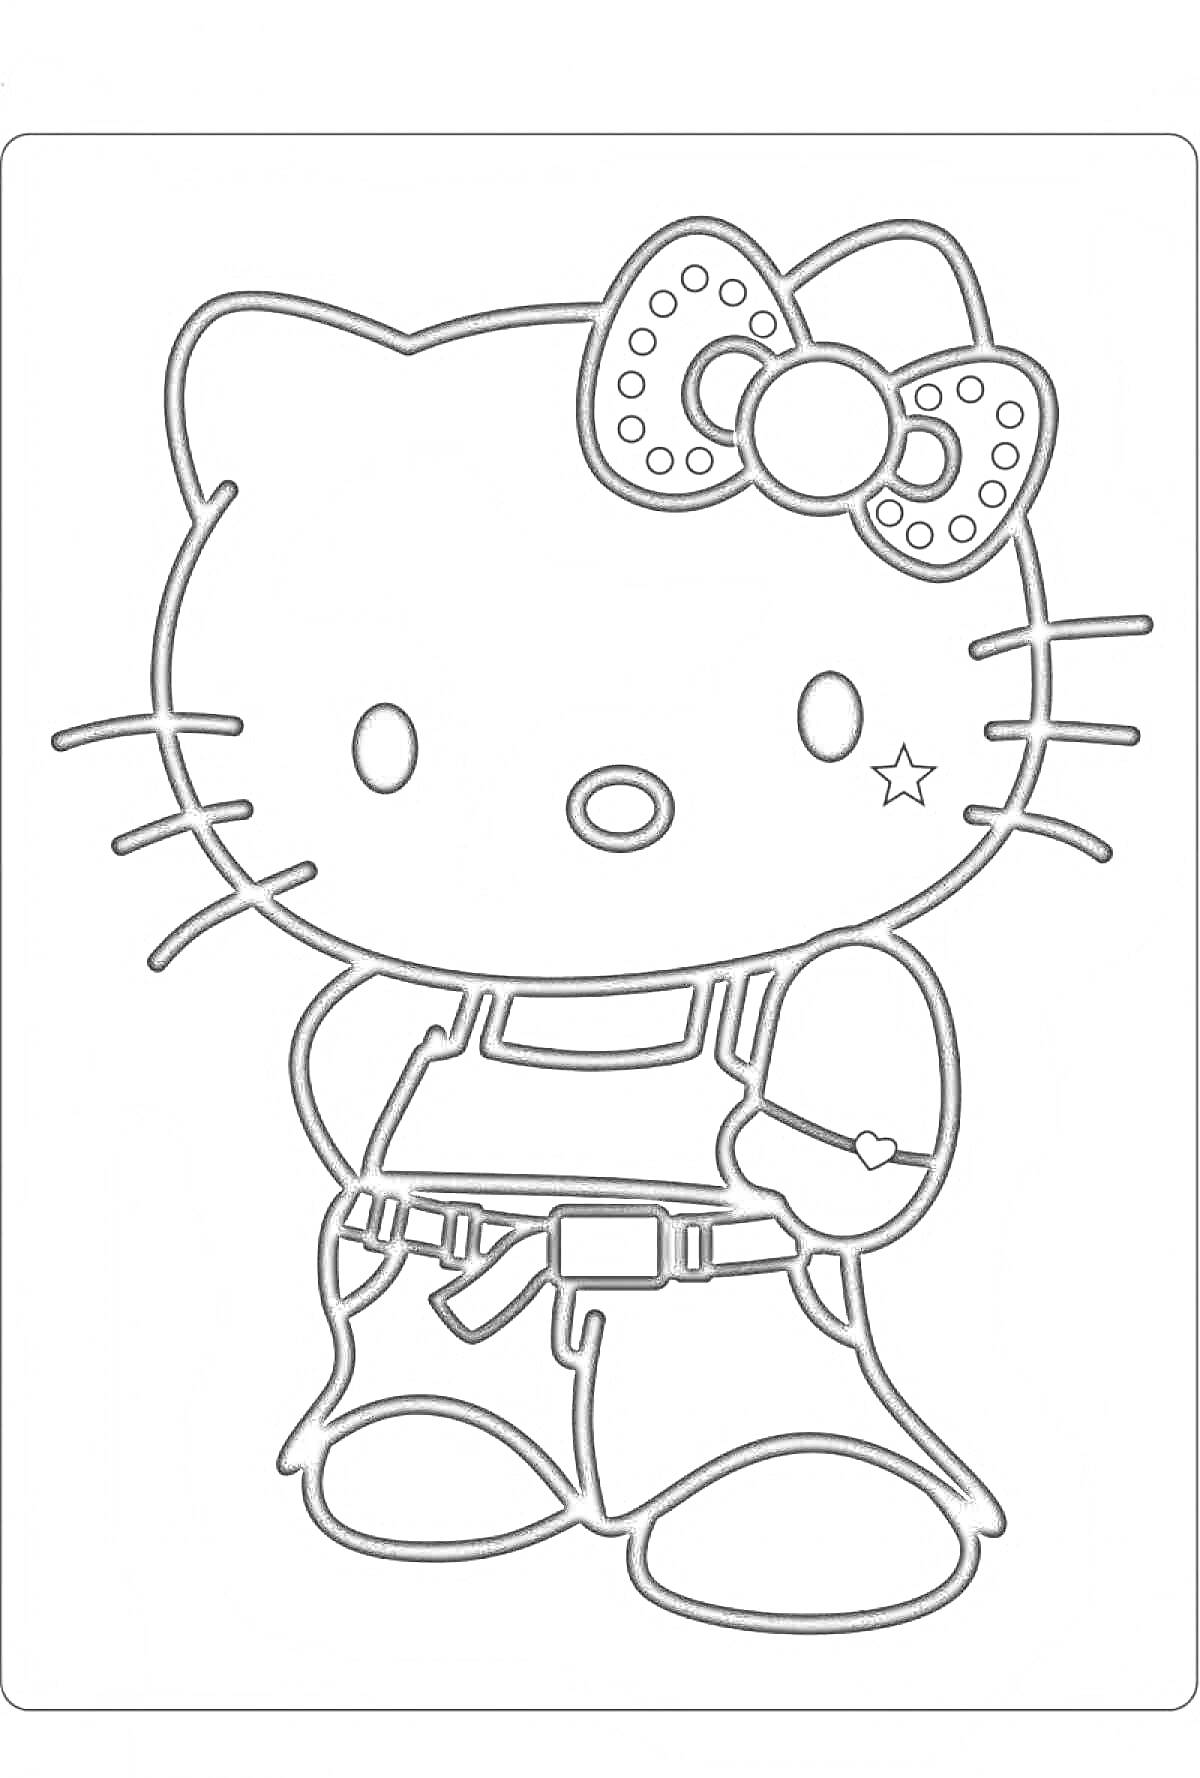 Раскраска Hello Kitty в комбинезоне с бантом и звездочкой на щеке